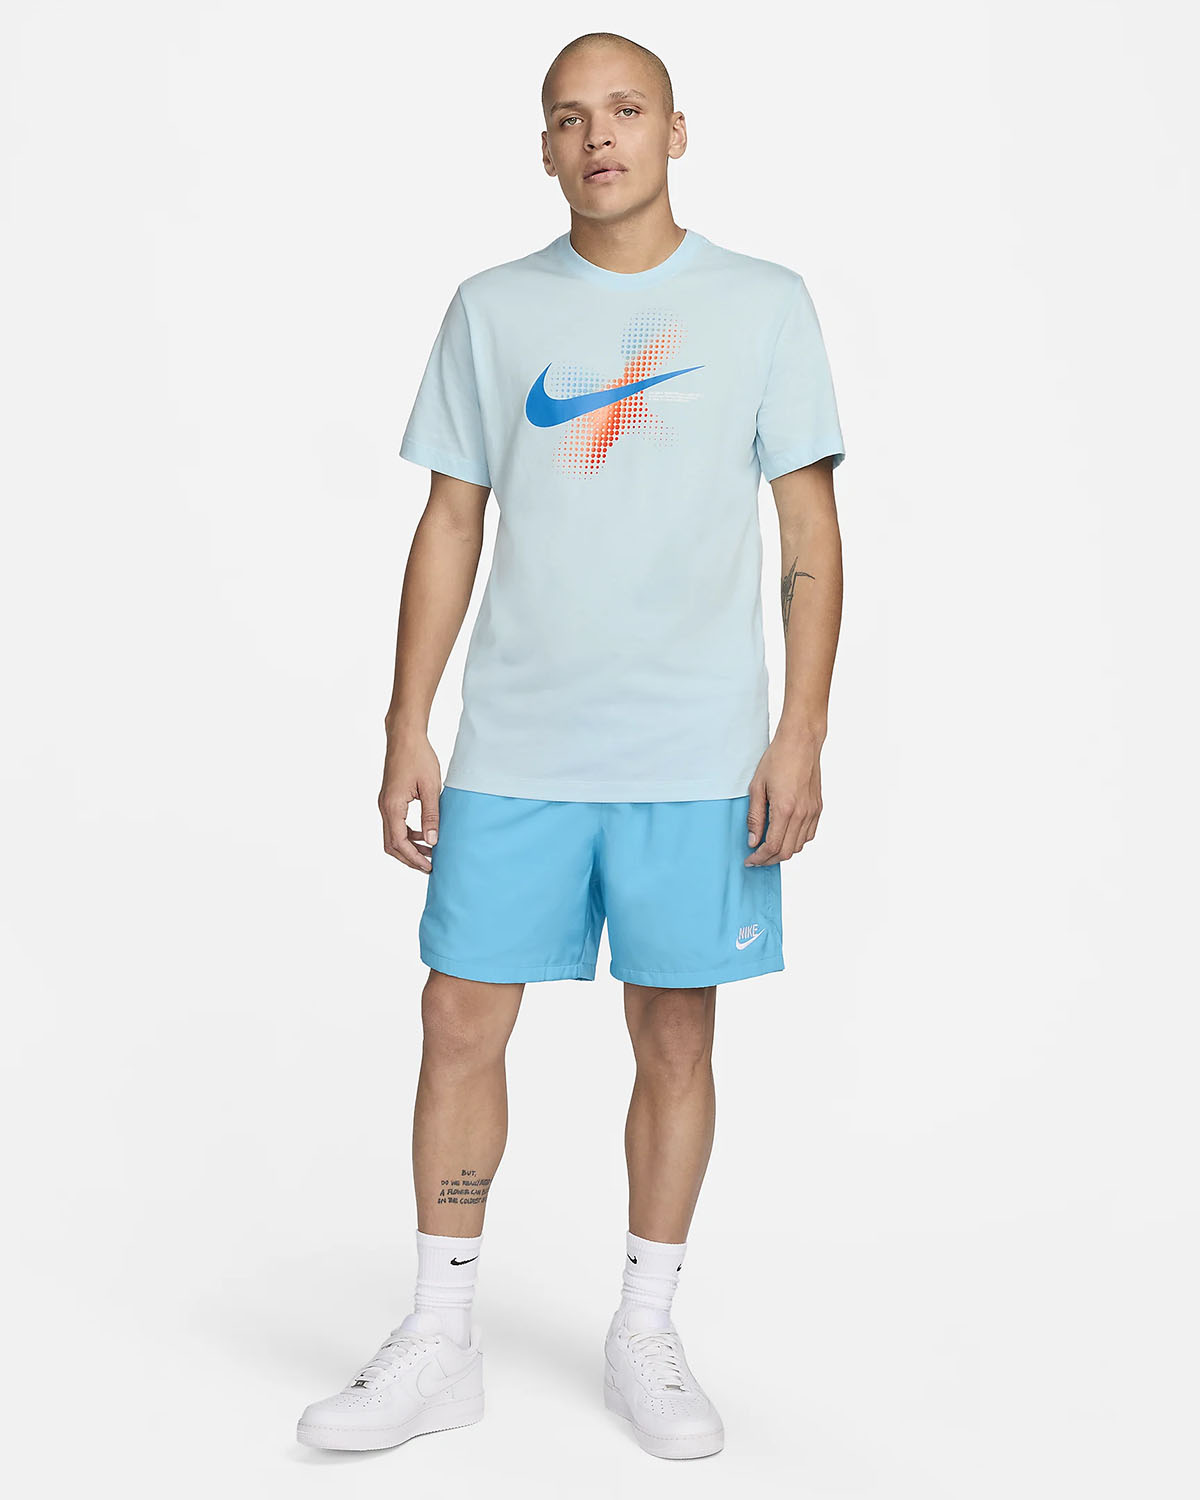 Nike Sportswear Swoosh T Shirt Glacier Blue Outfit